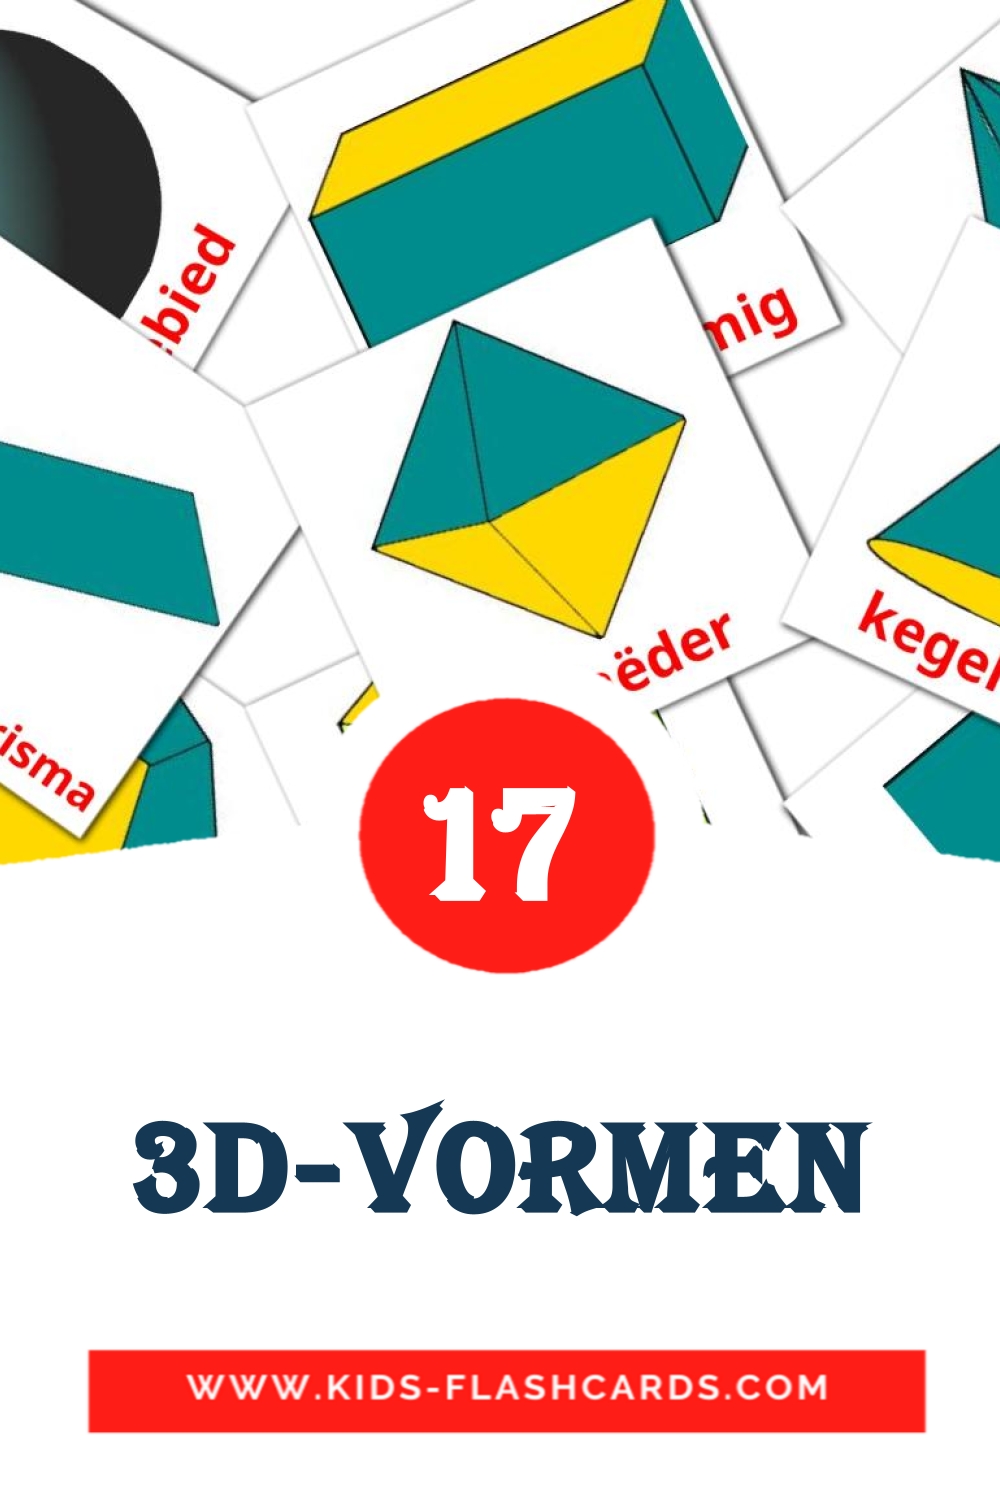 17 3D-vormen Picture Cards for Kindergarden in dutch